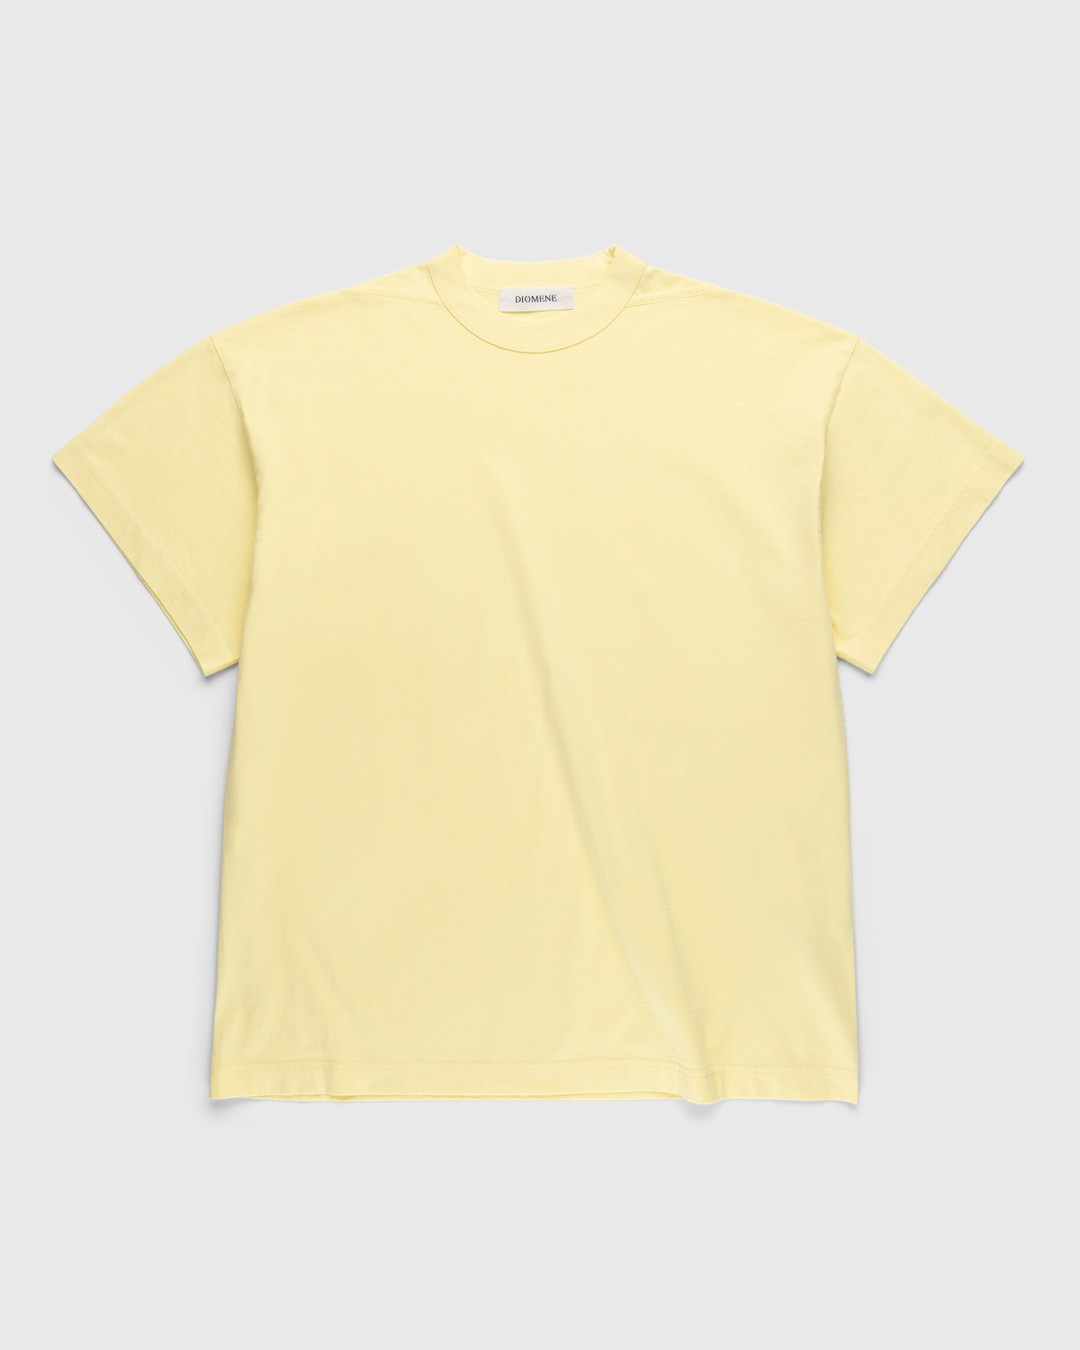 Diomene by Damir Doma – Cotton Crewneck T-Shirt Lemonade - Tops - Yellow - Image 1